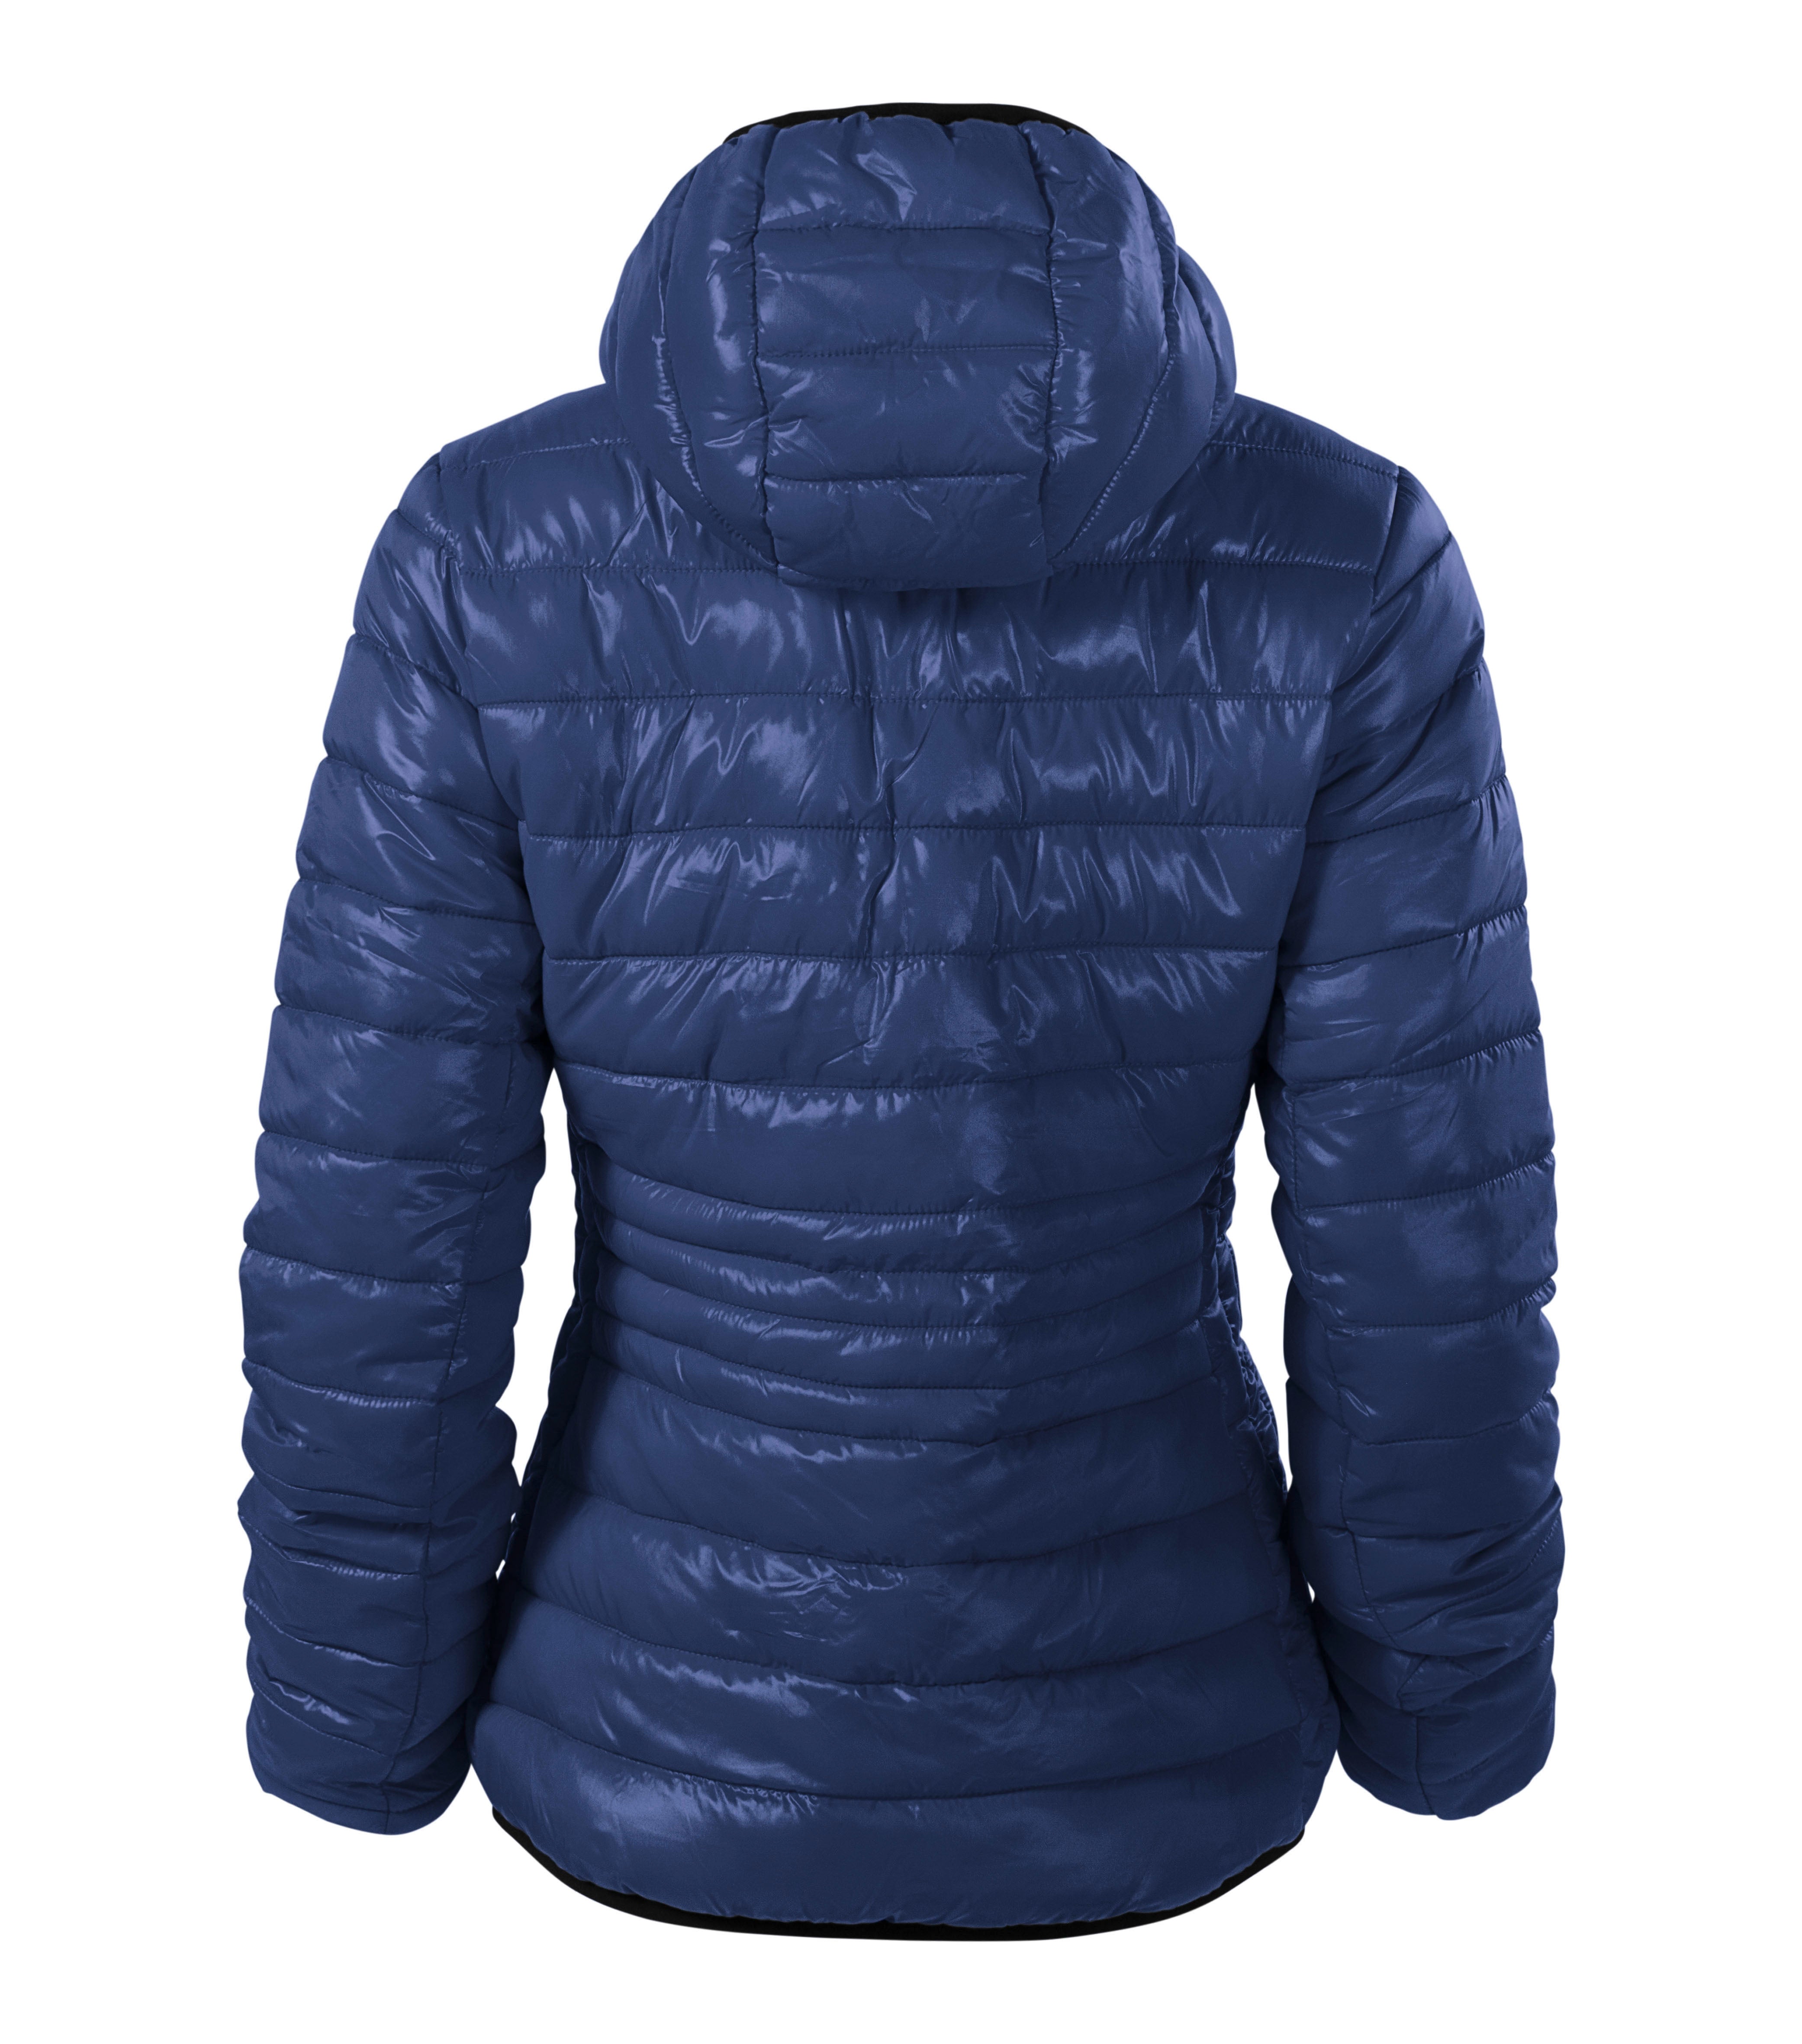 Everest jacket